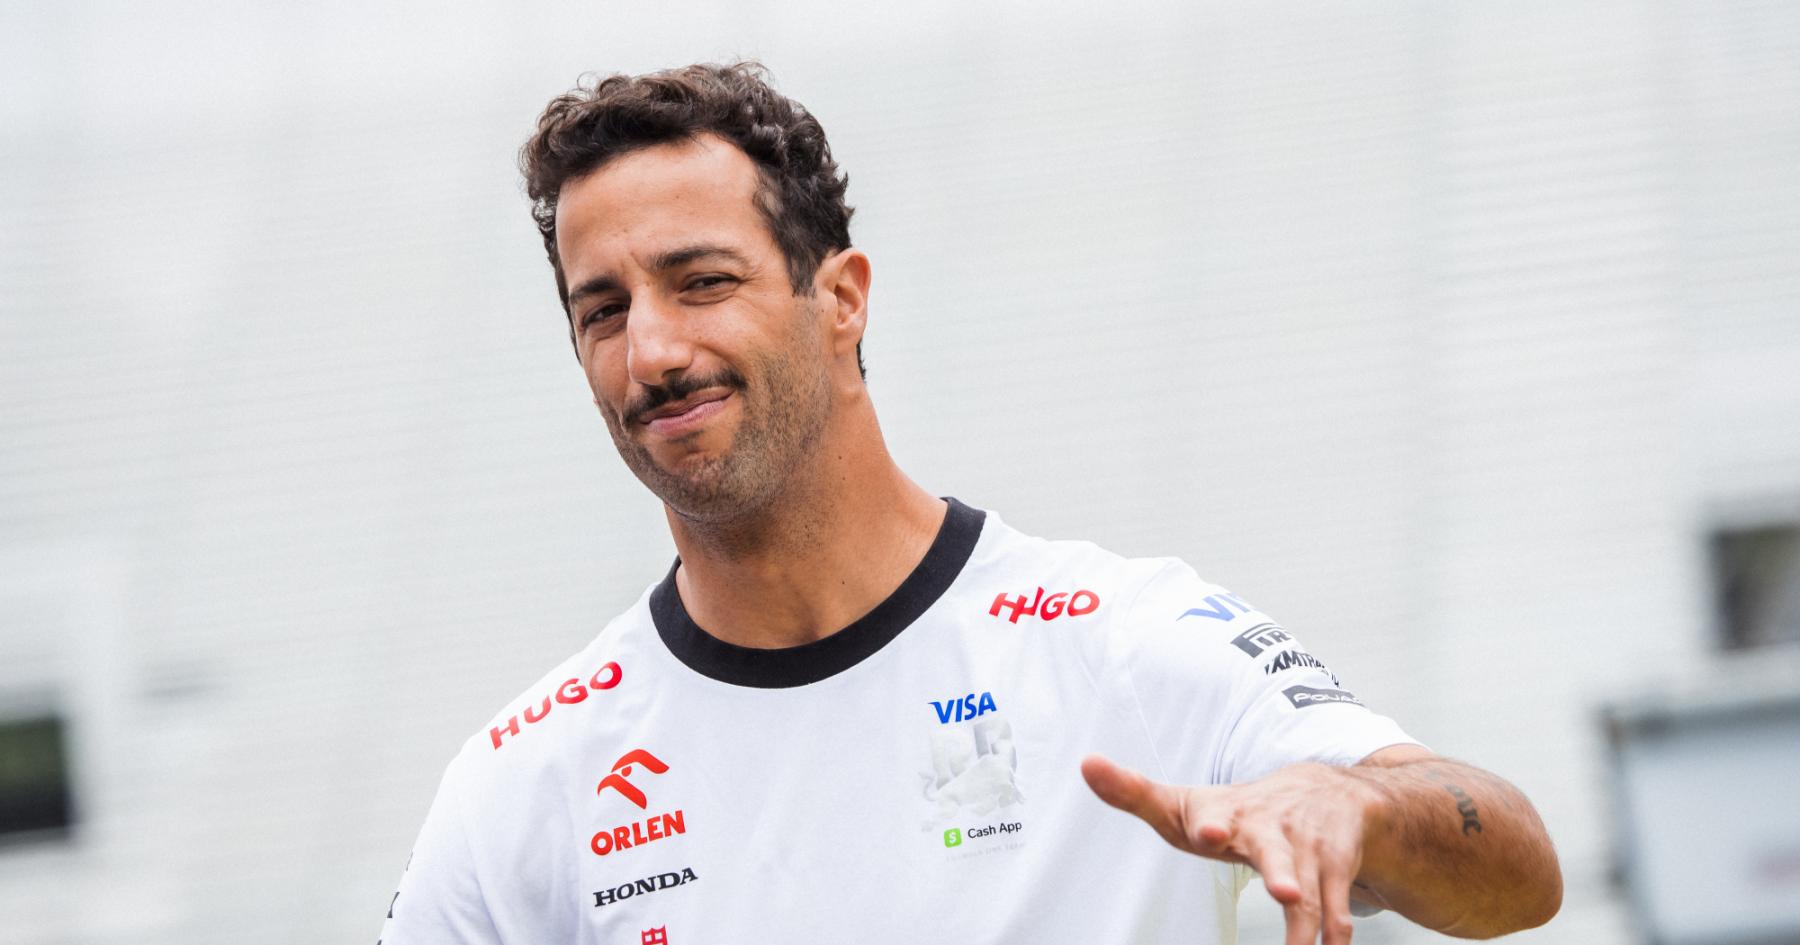 Unleashing Emotion: The Controversial Outburst of Ricciardo